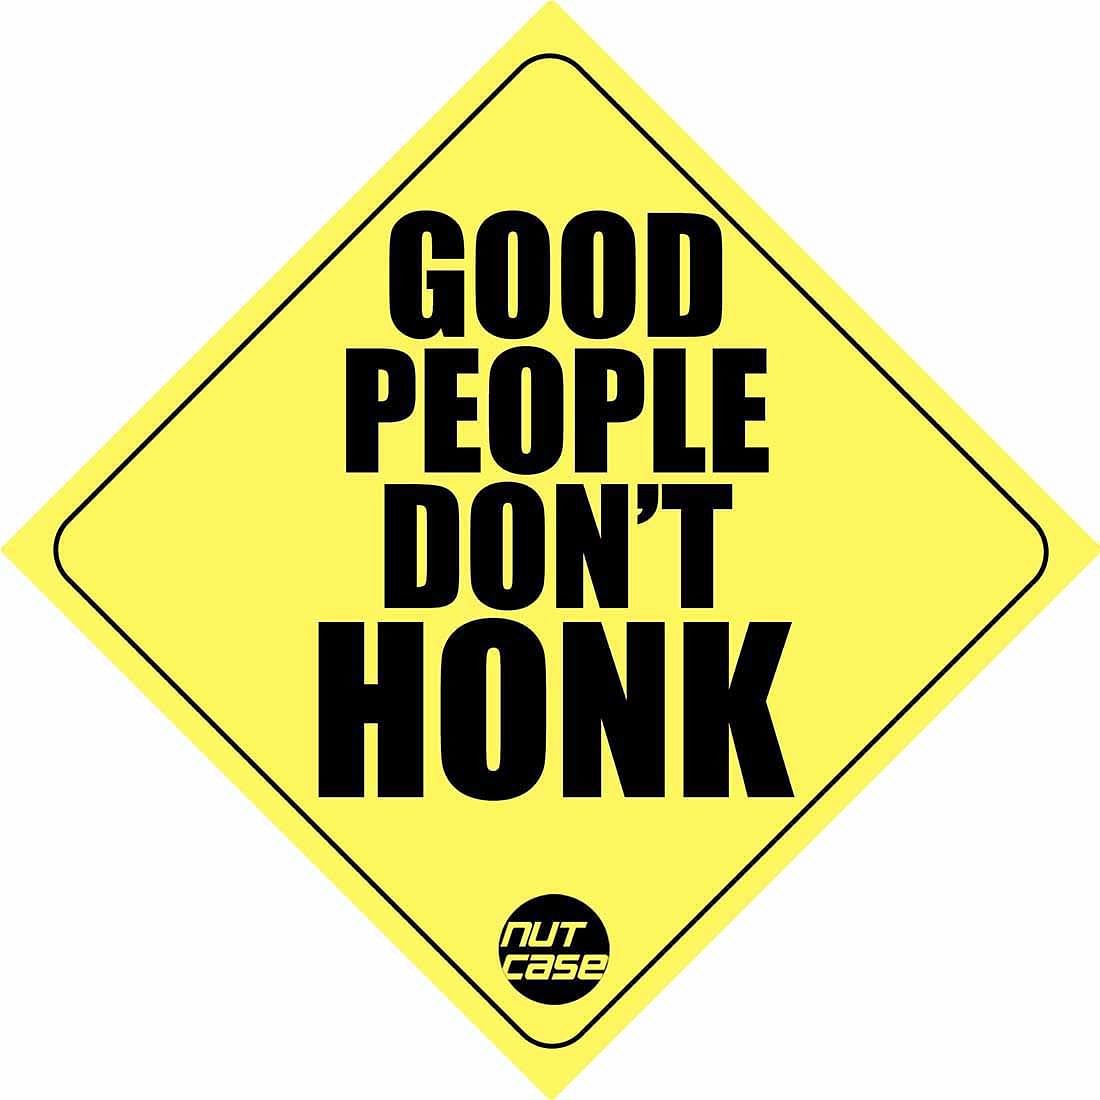 Automobile Vehicle Bumper Sticker - Good People Don't Honk Nutcase